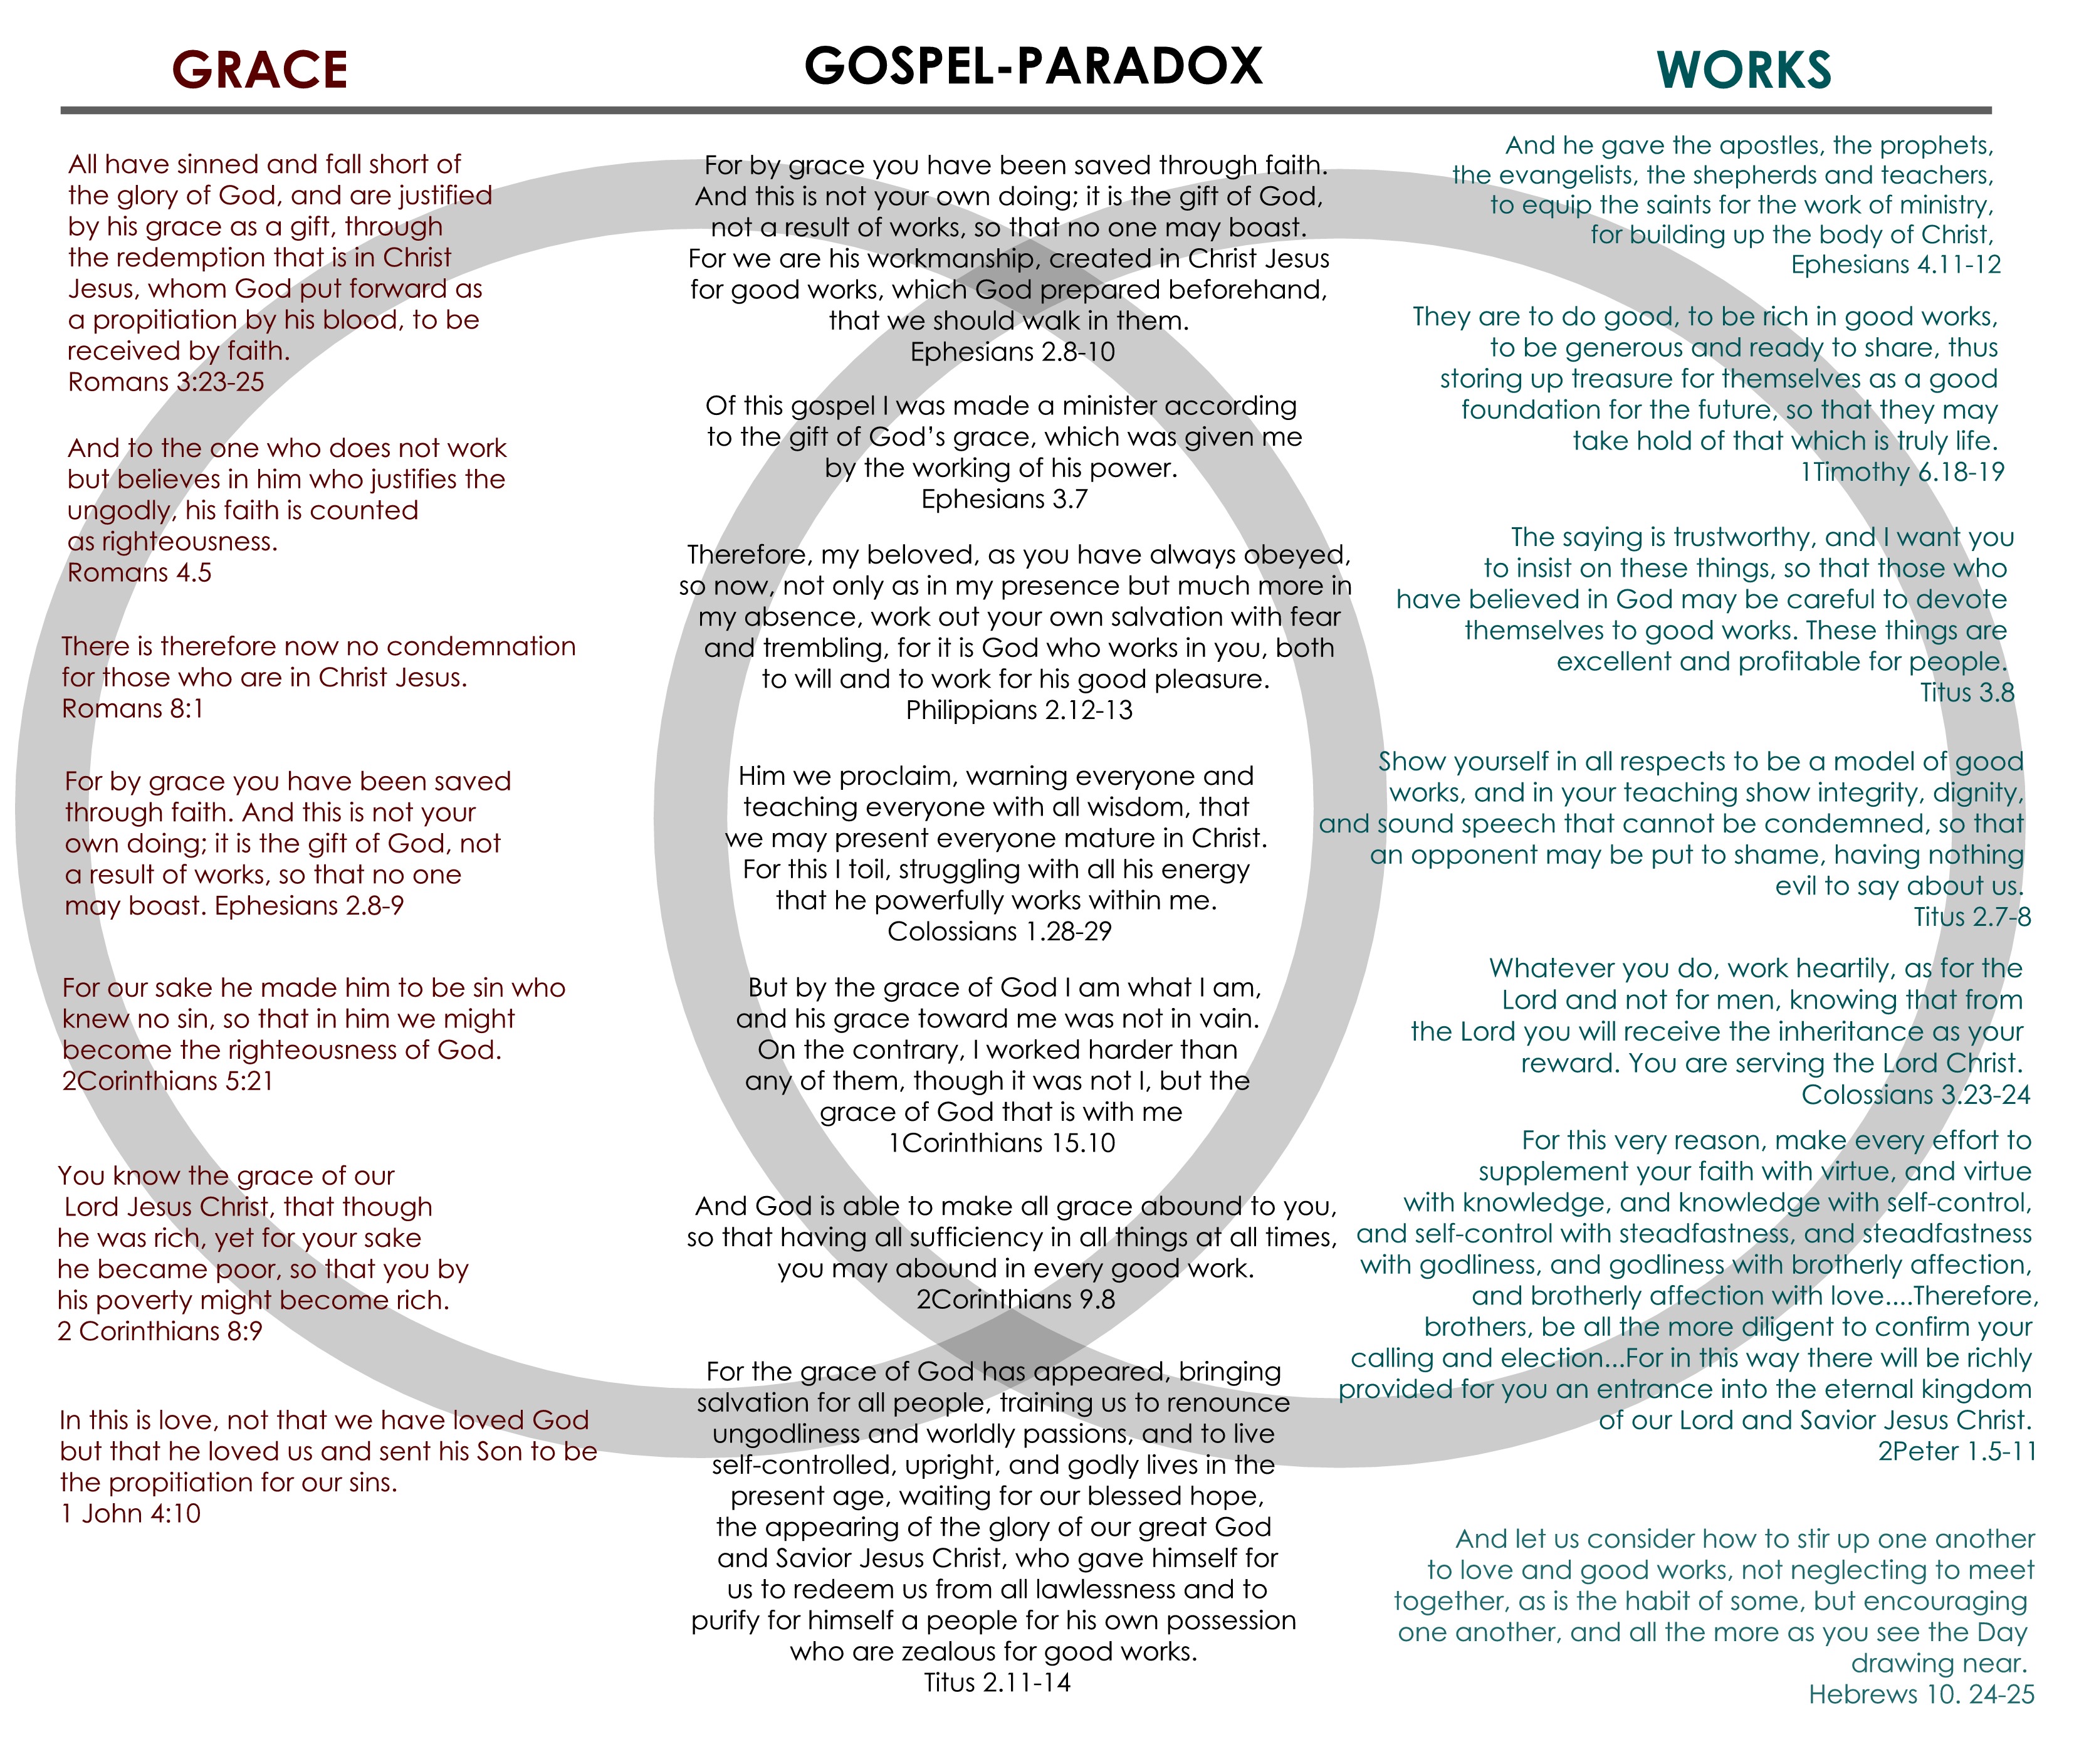 The gospel-grace-works paradox